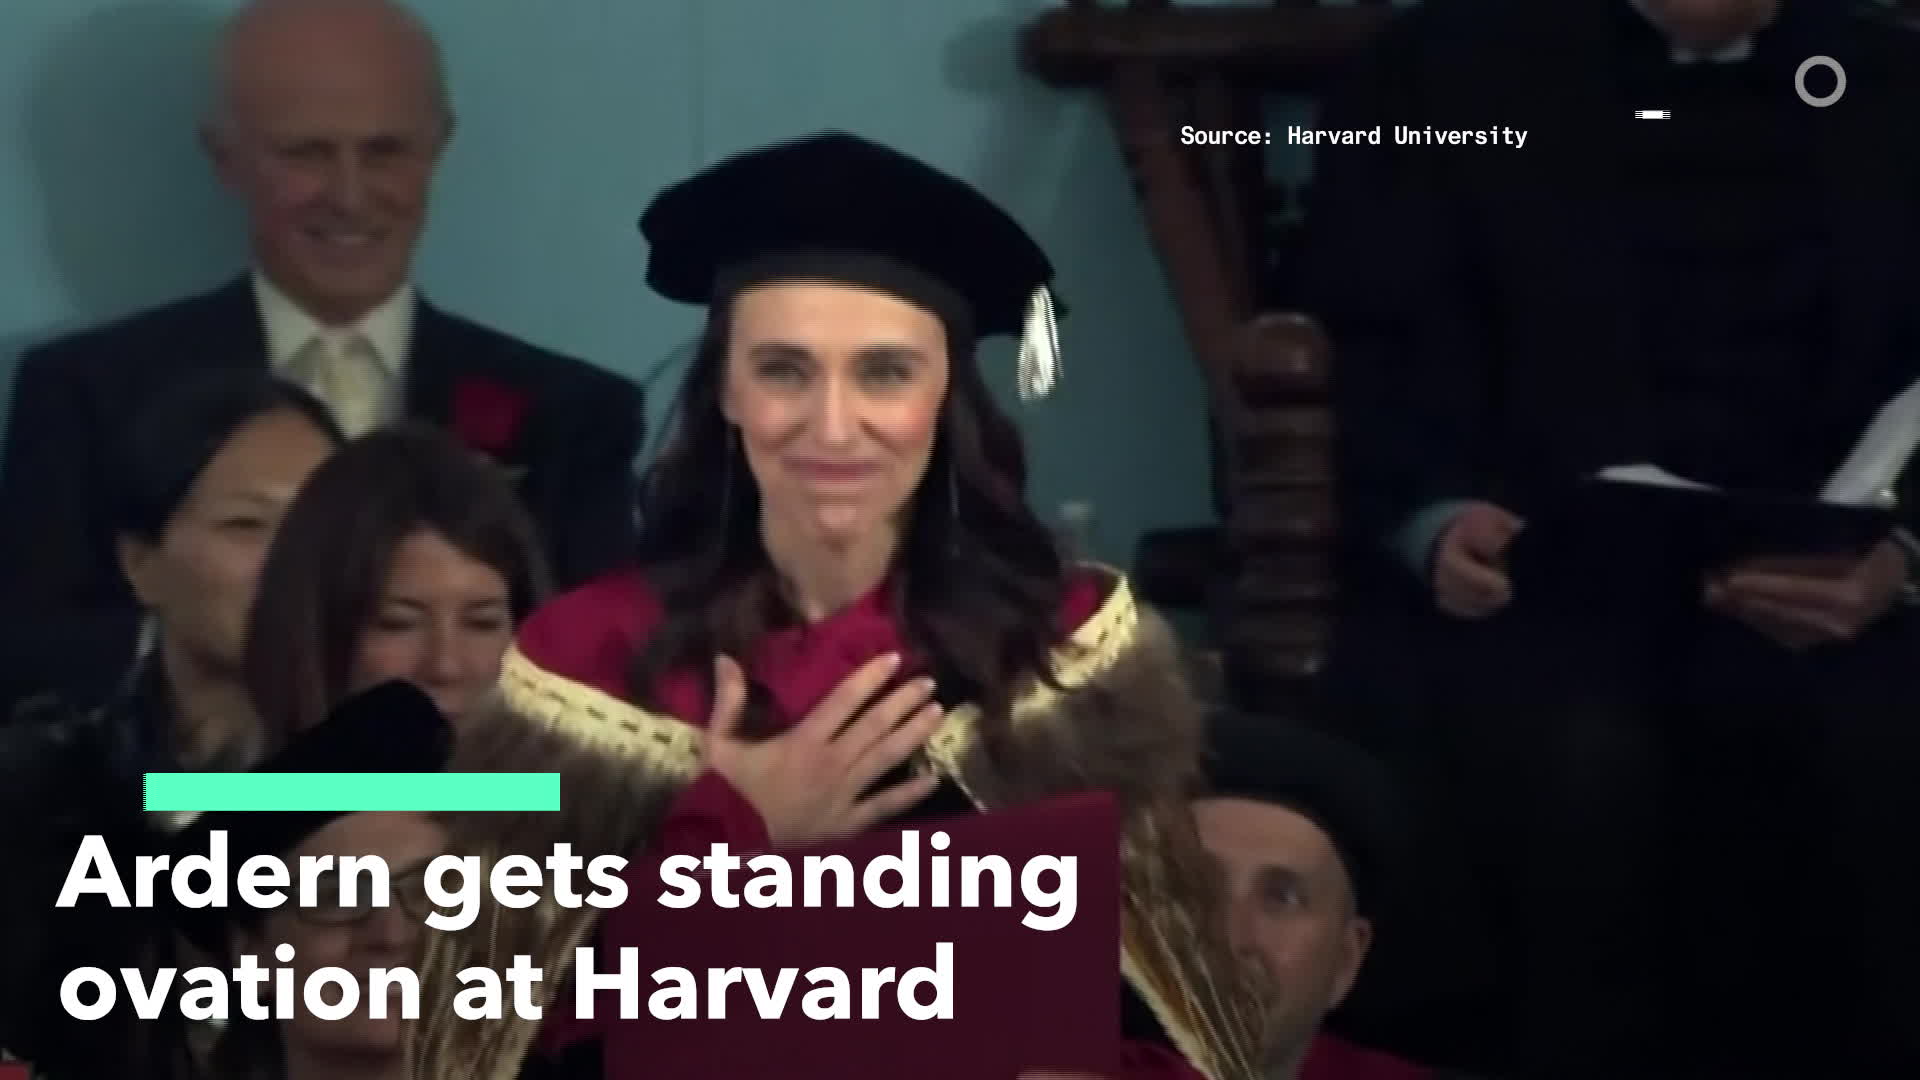 New Zealand's Jacinda Ardern Gets Standing Ovation at Harvard